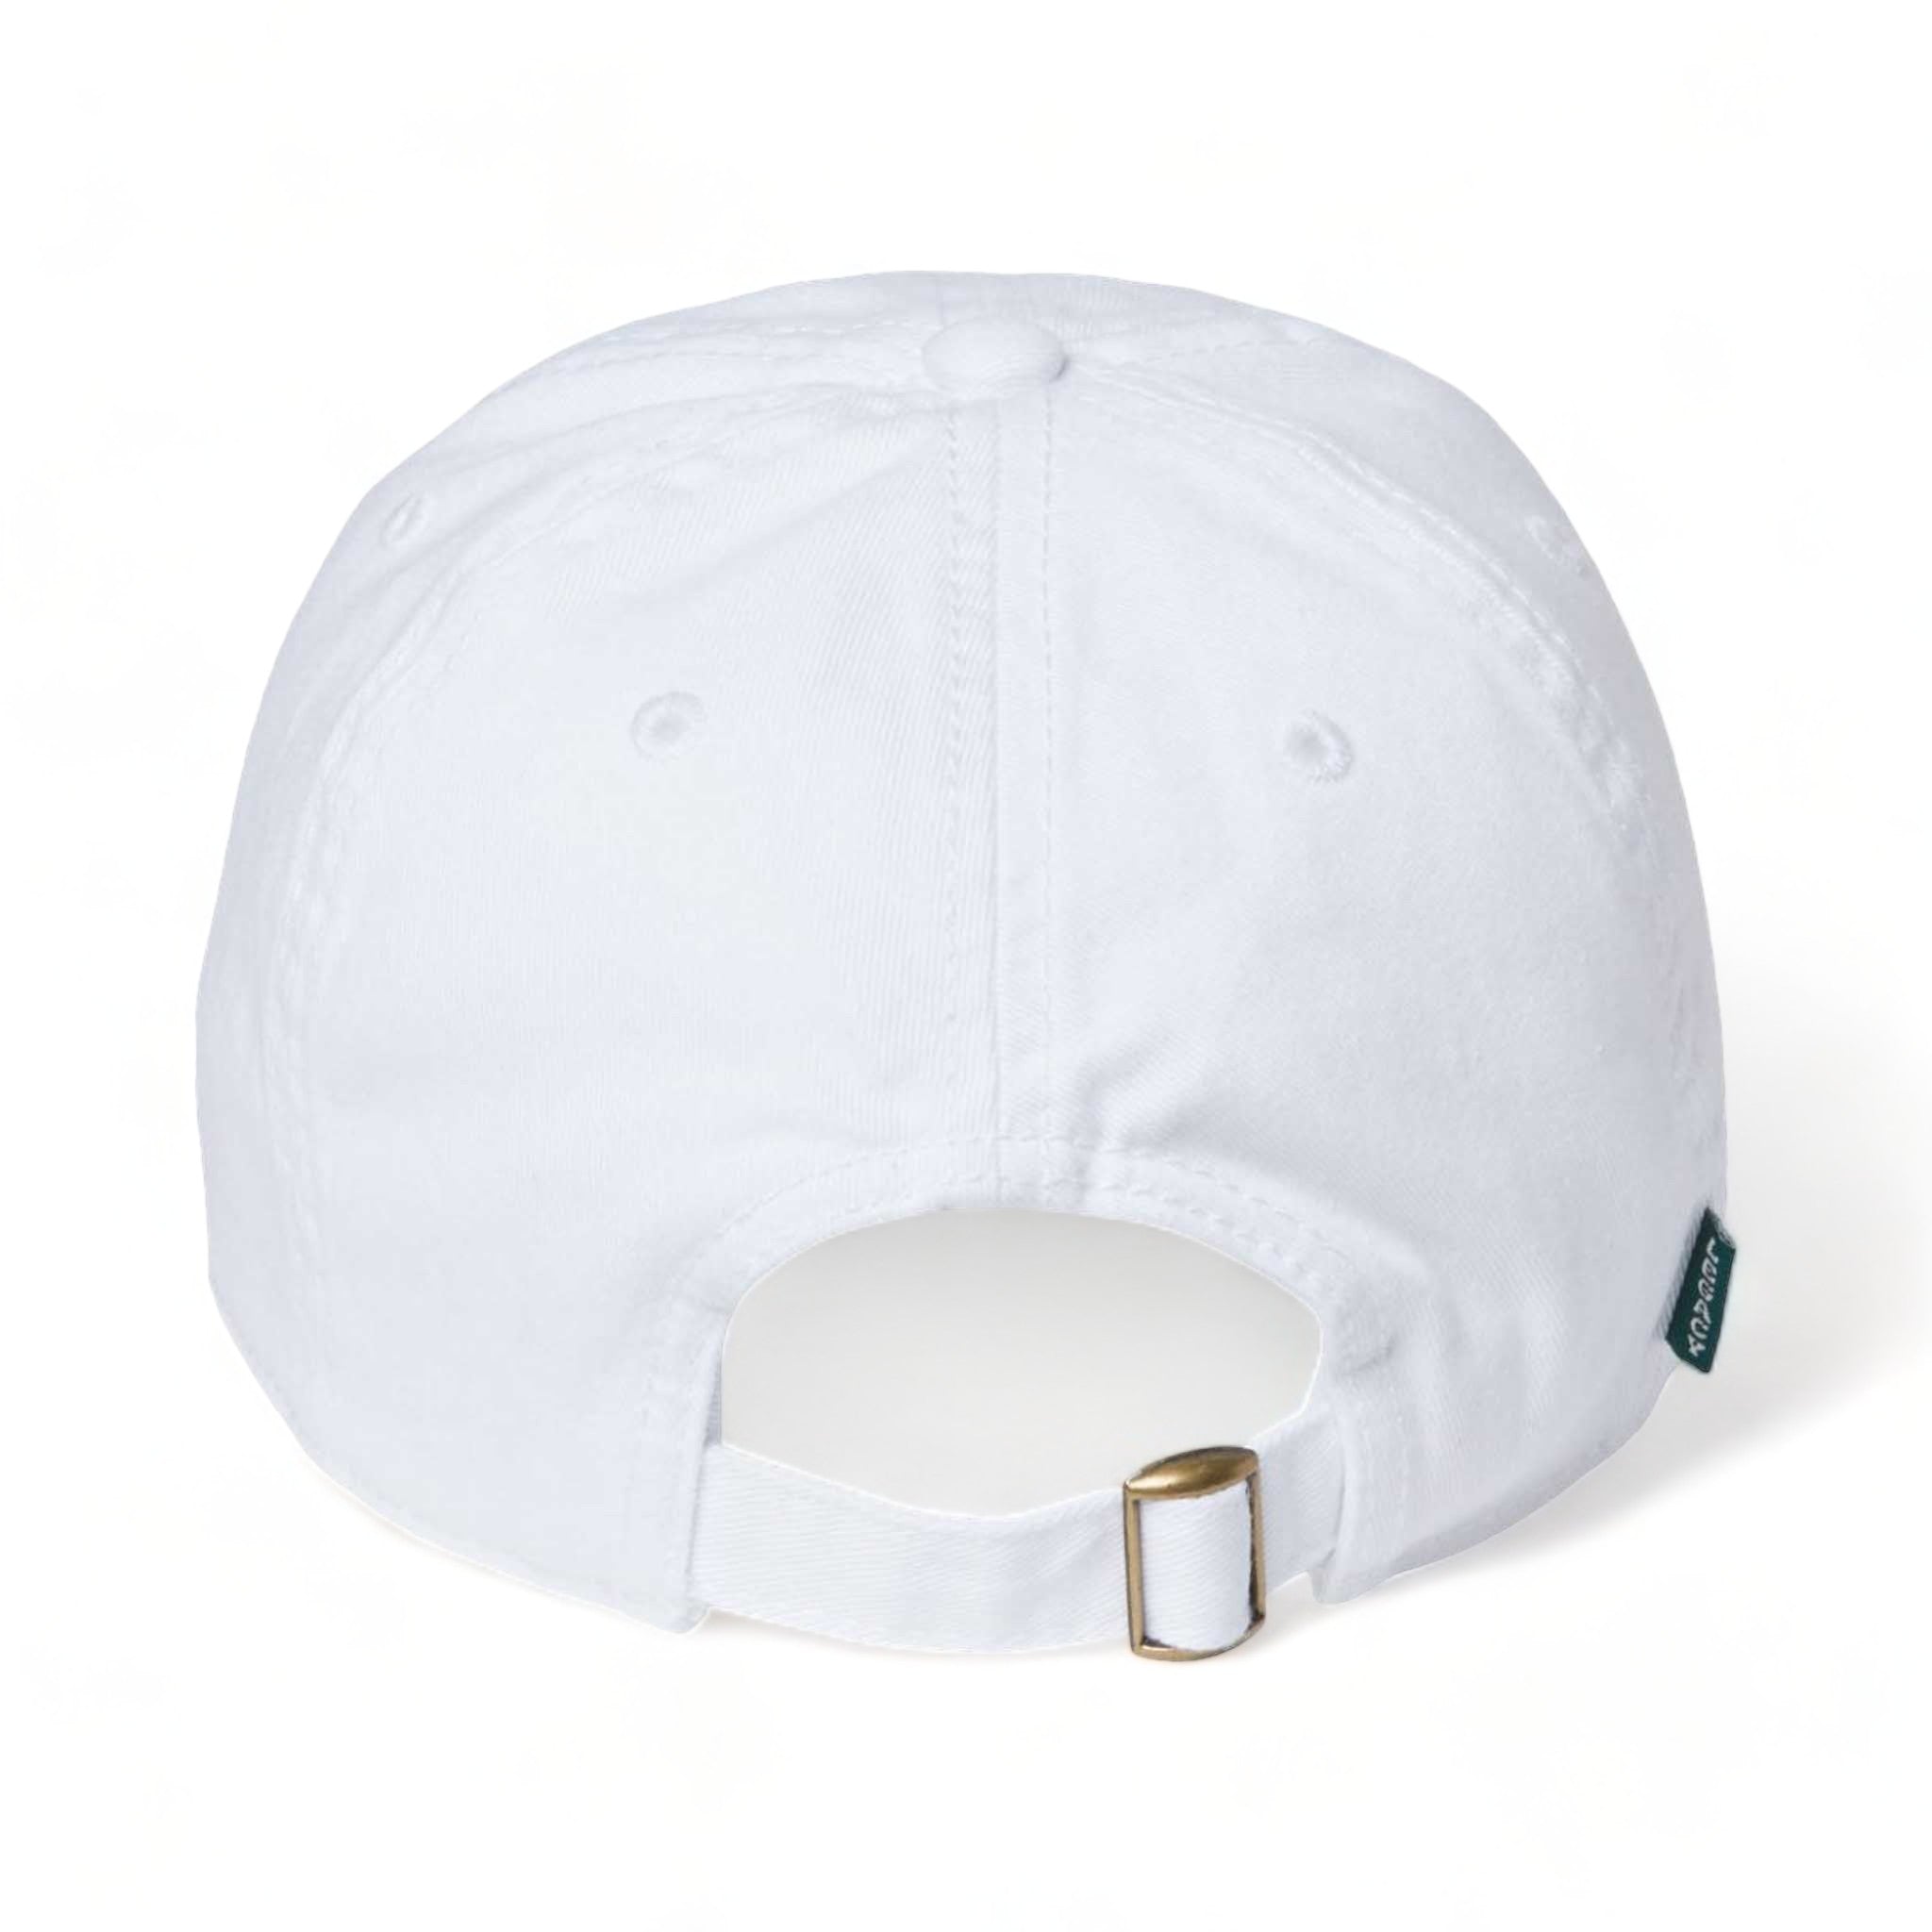 Back view of LEGACY EZA custom hat in white